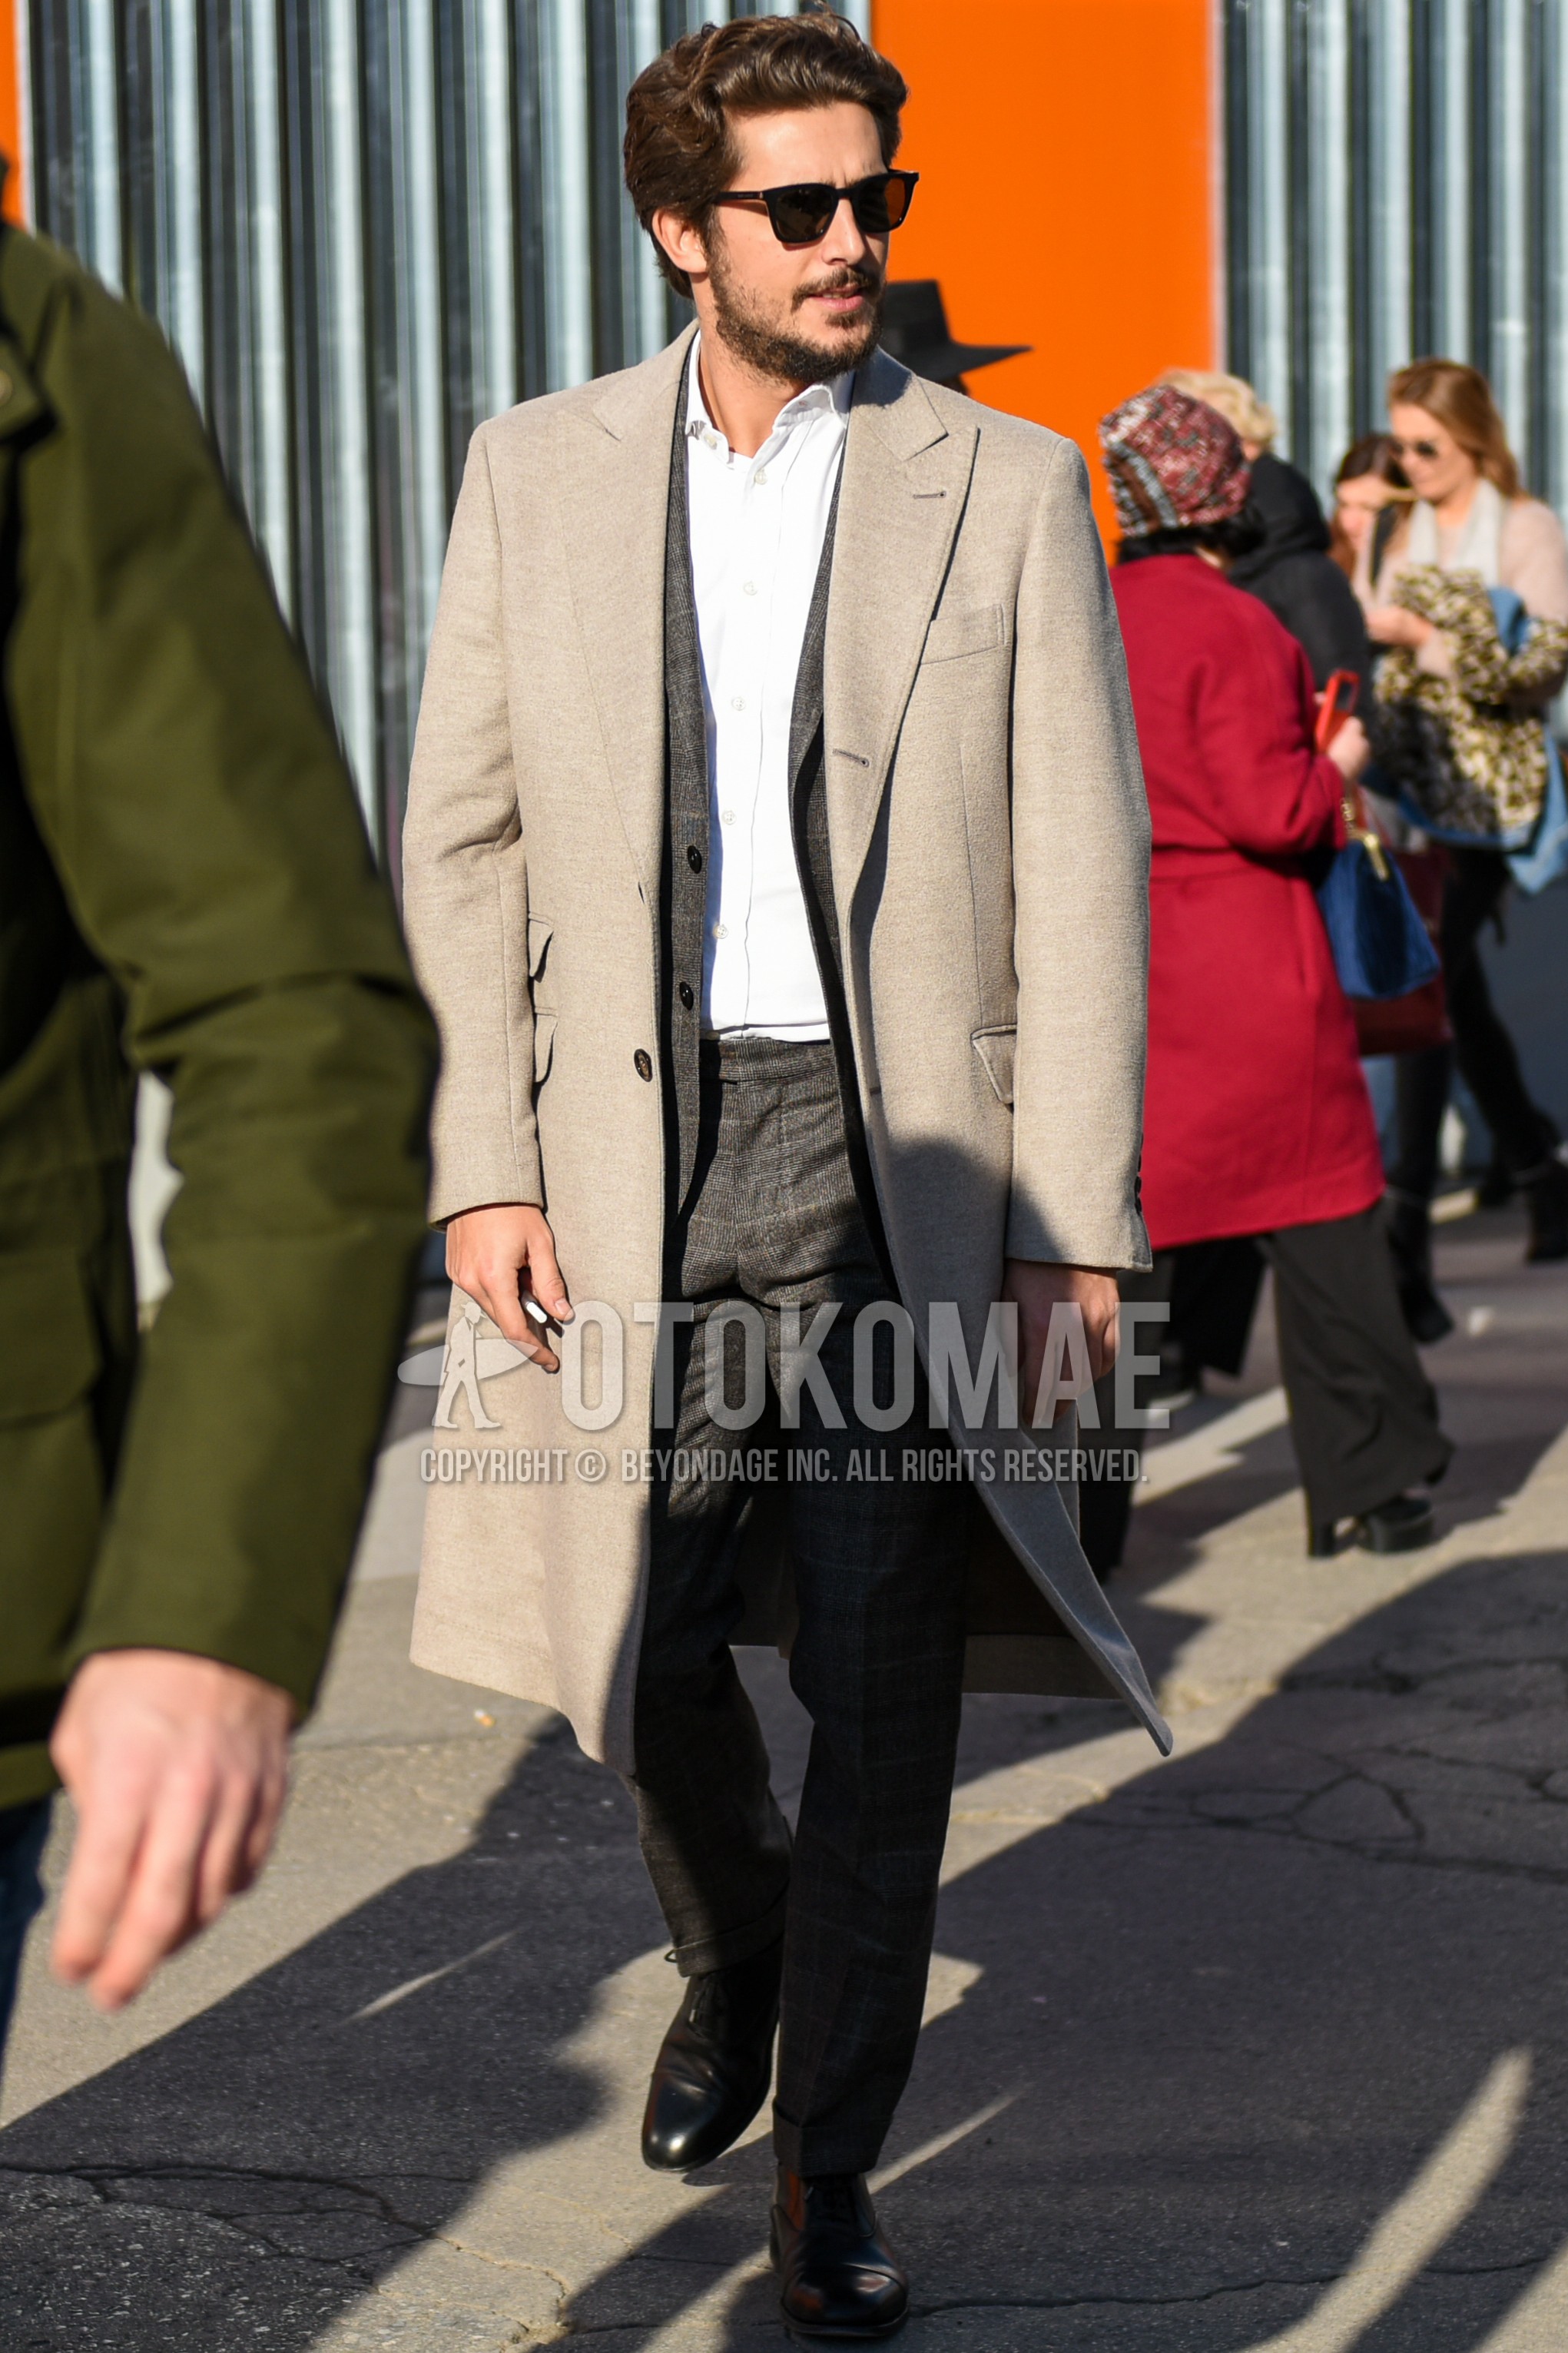 Men's autumn winter outfit with black plain sunglasses, gray plain chester coat, white plain shirt, black straight-tip shoes leather shoes, gray check suit.